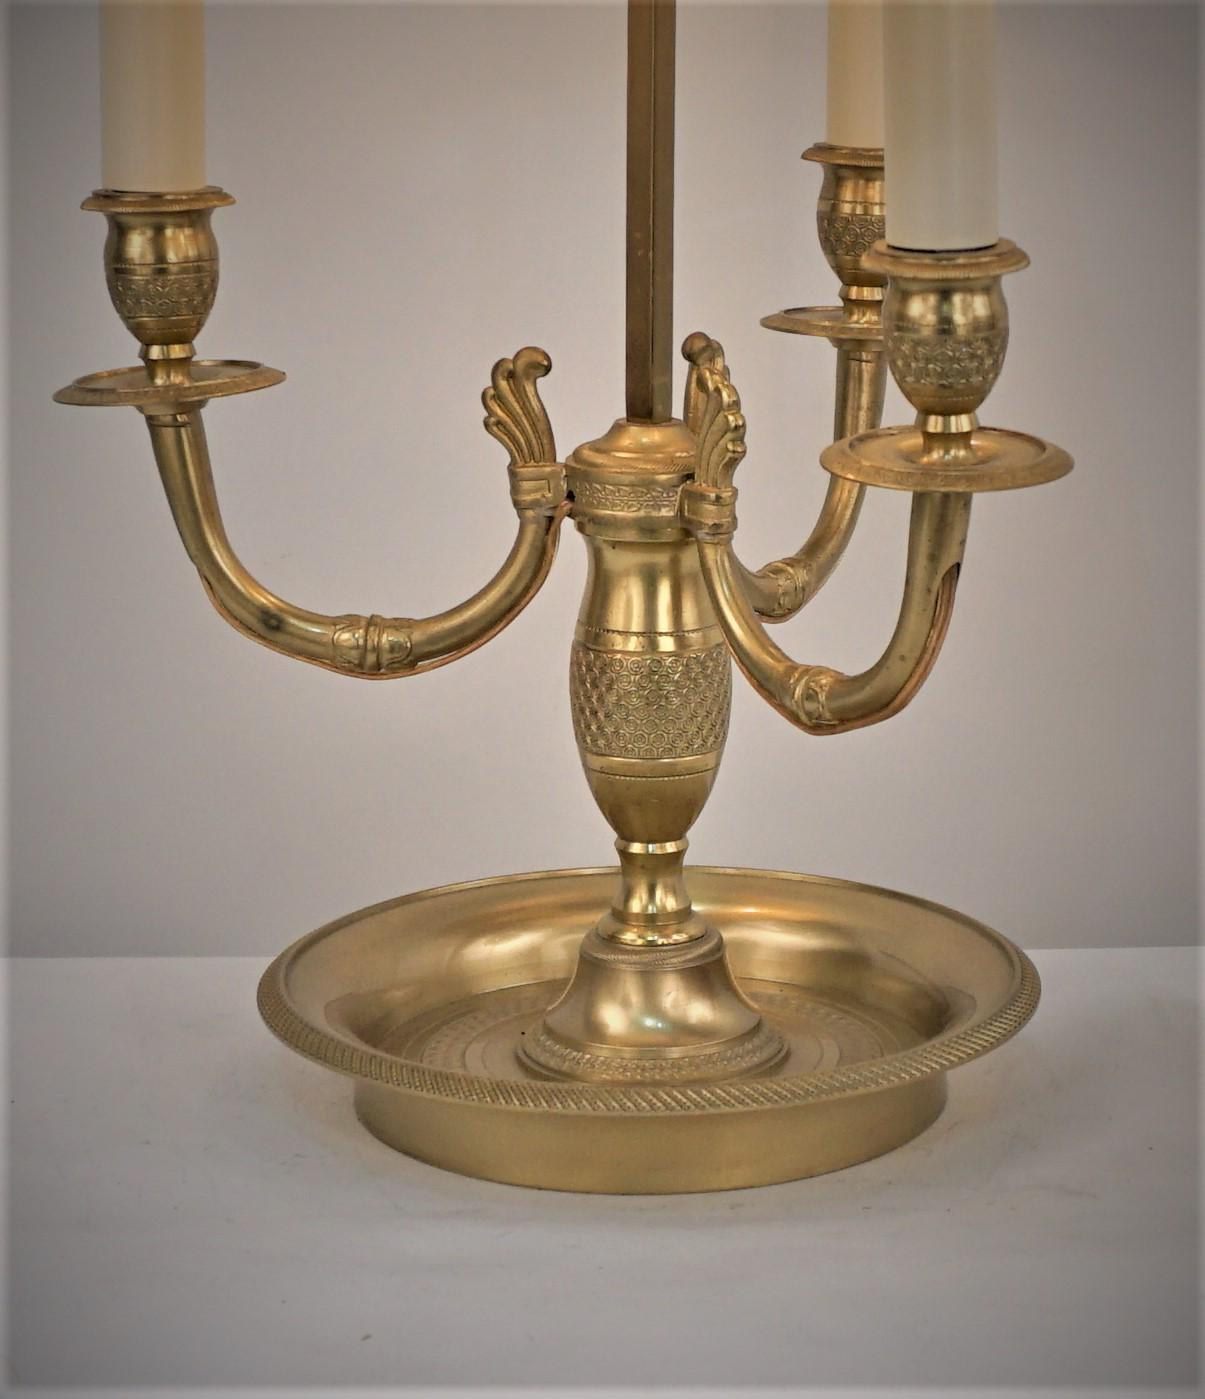 Elegant three light circle 1900 bouillotte table lamp with adjustable shade.